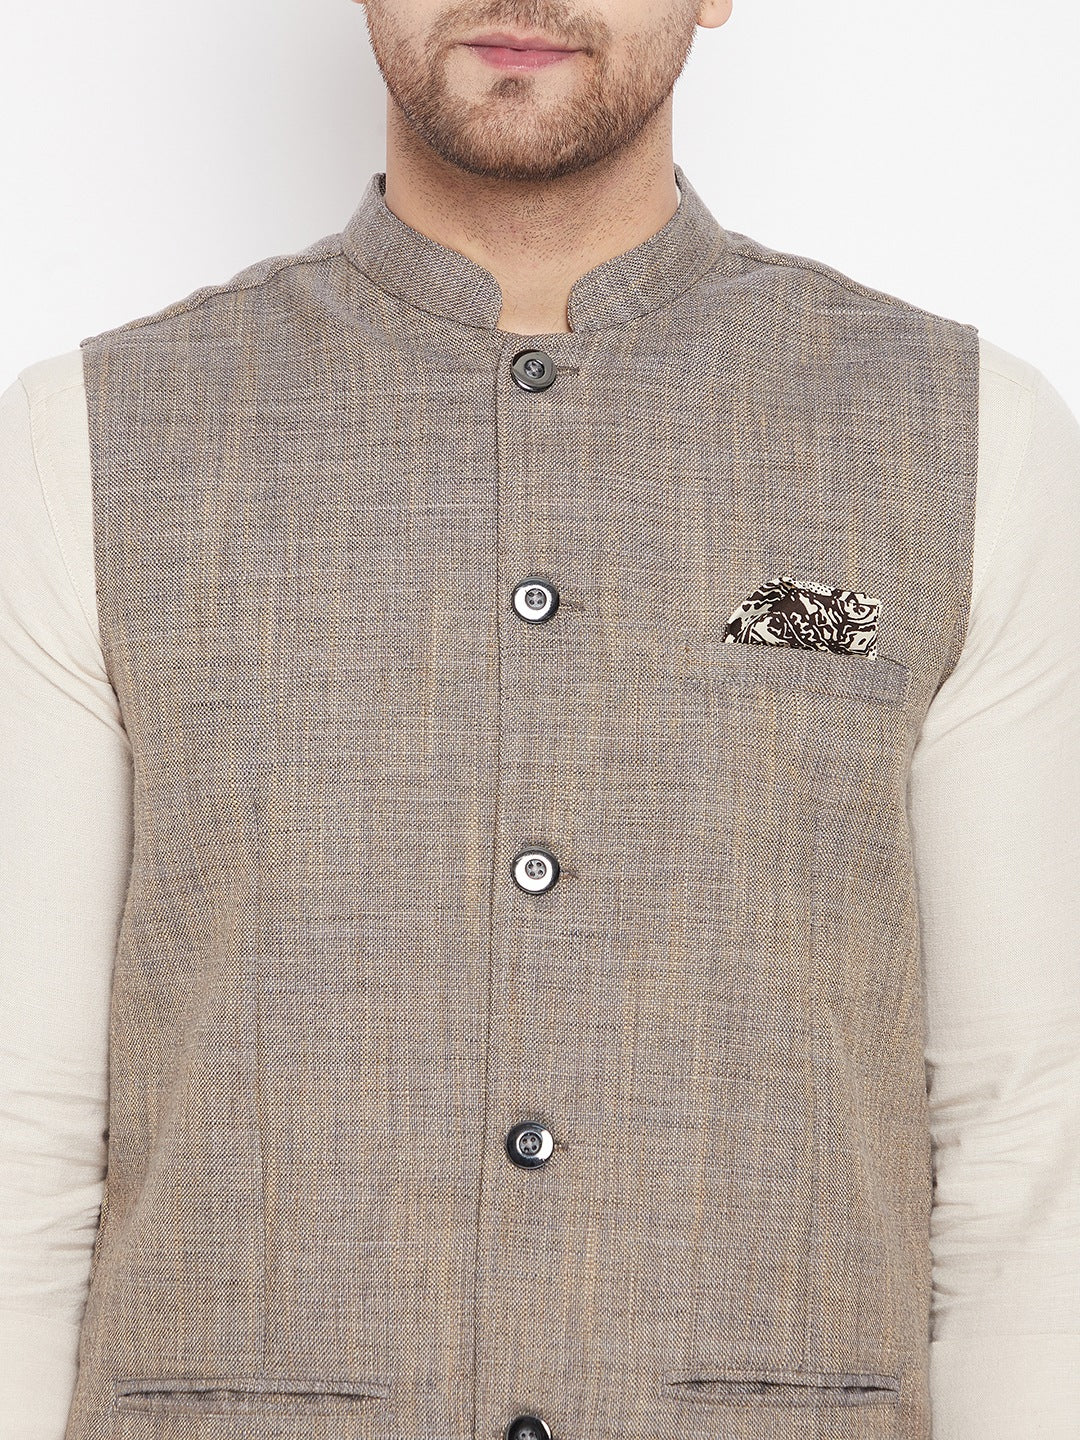 Men's Brown Color Woven Nehru Jacket - Even Apparels